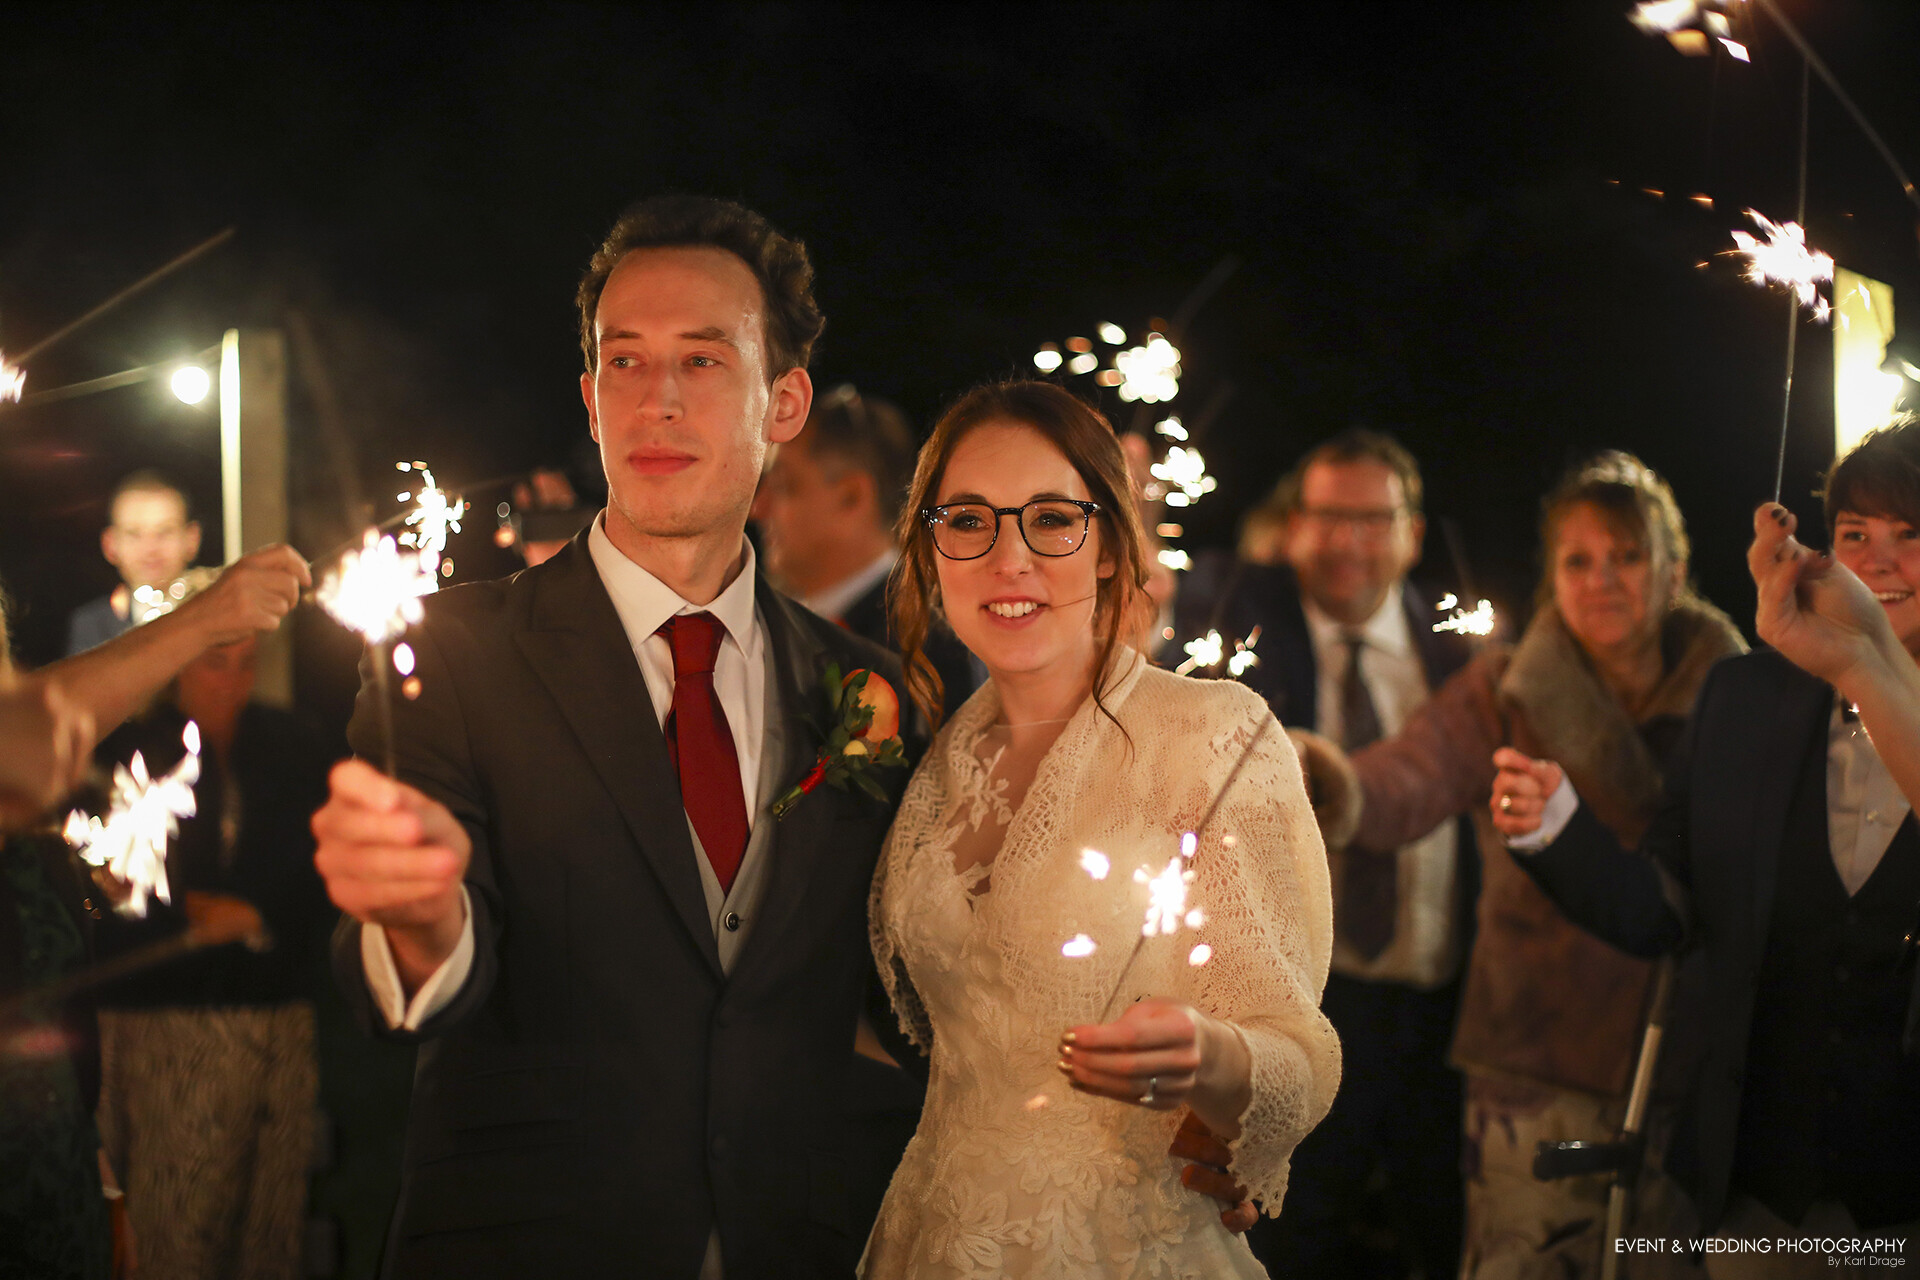 Bride & Groom celebrate their wedding with sparklers